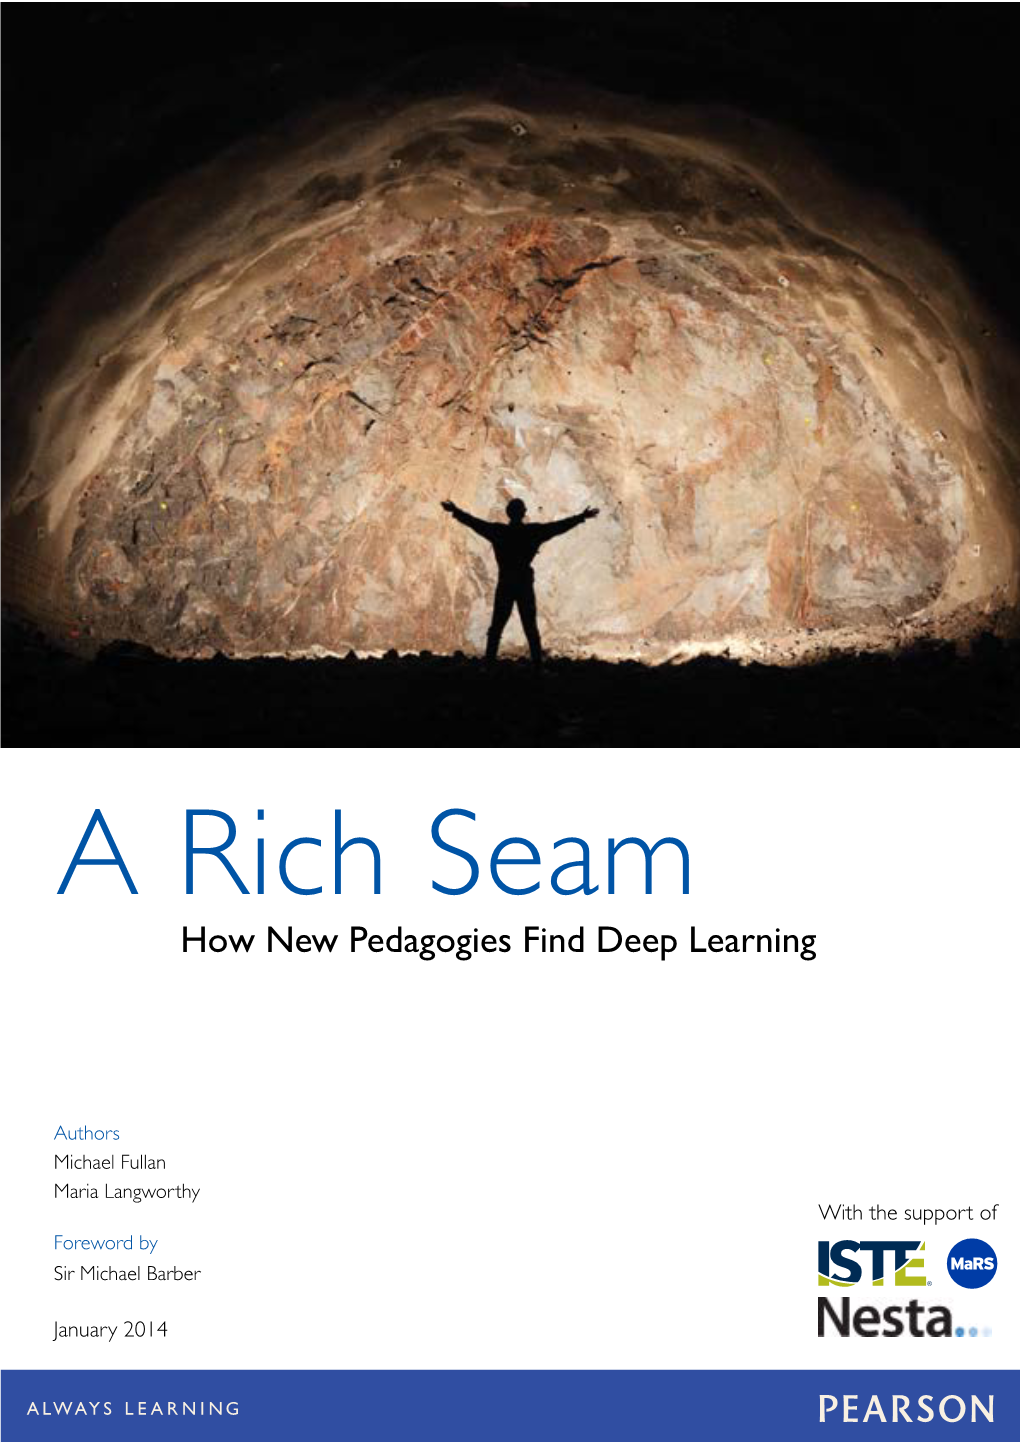 A Rich Seam: How New Pedagogies Find Deep